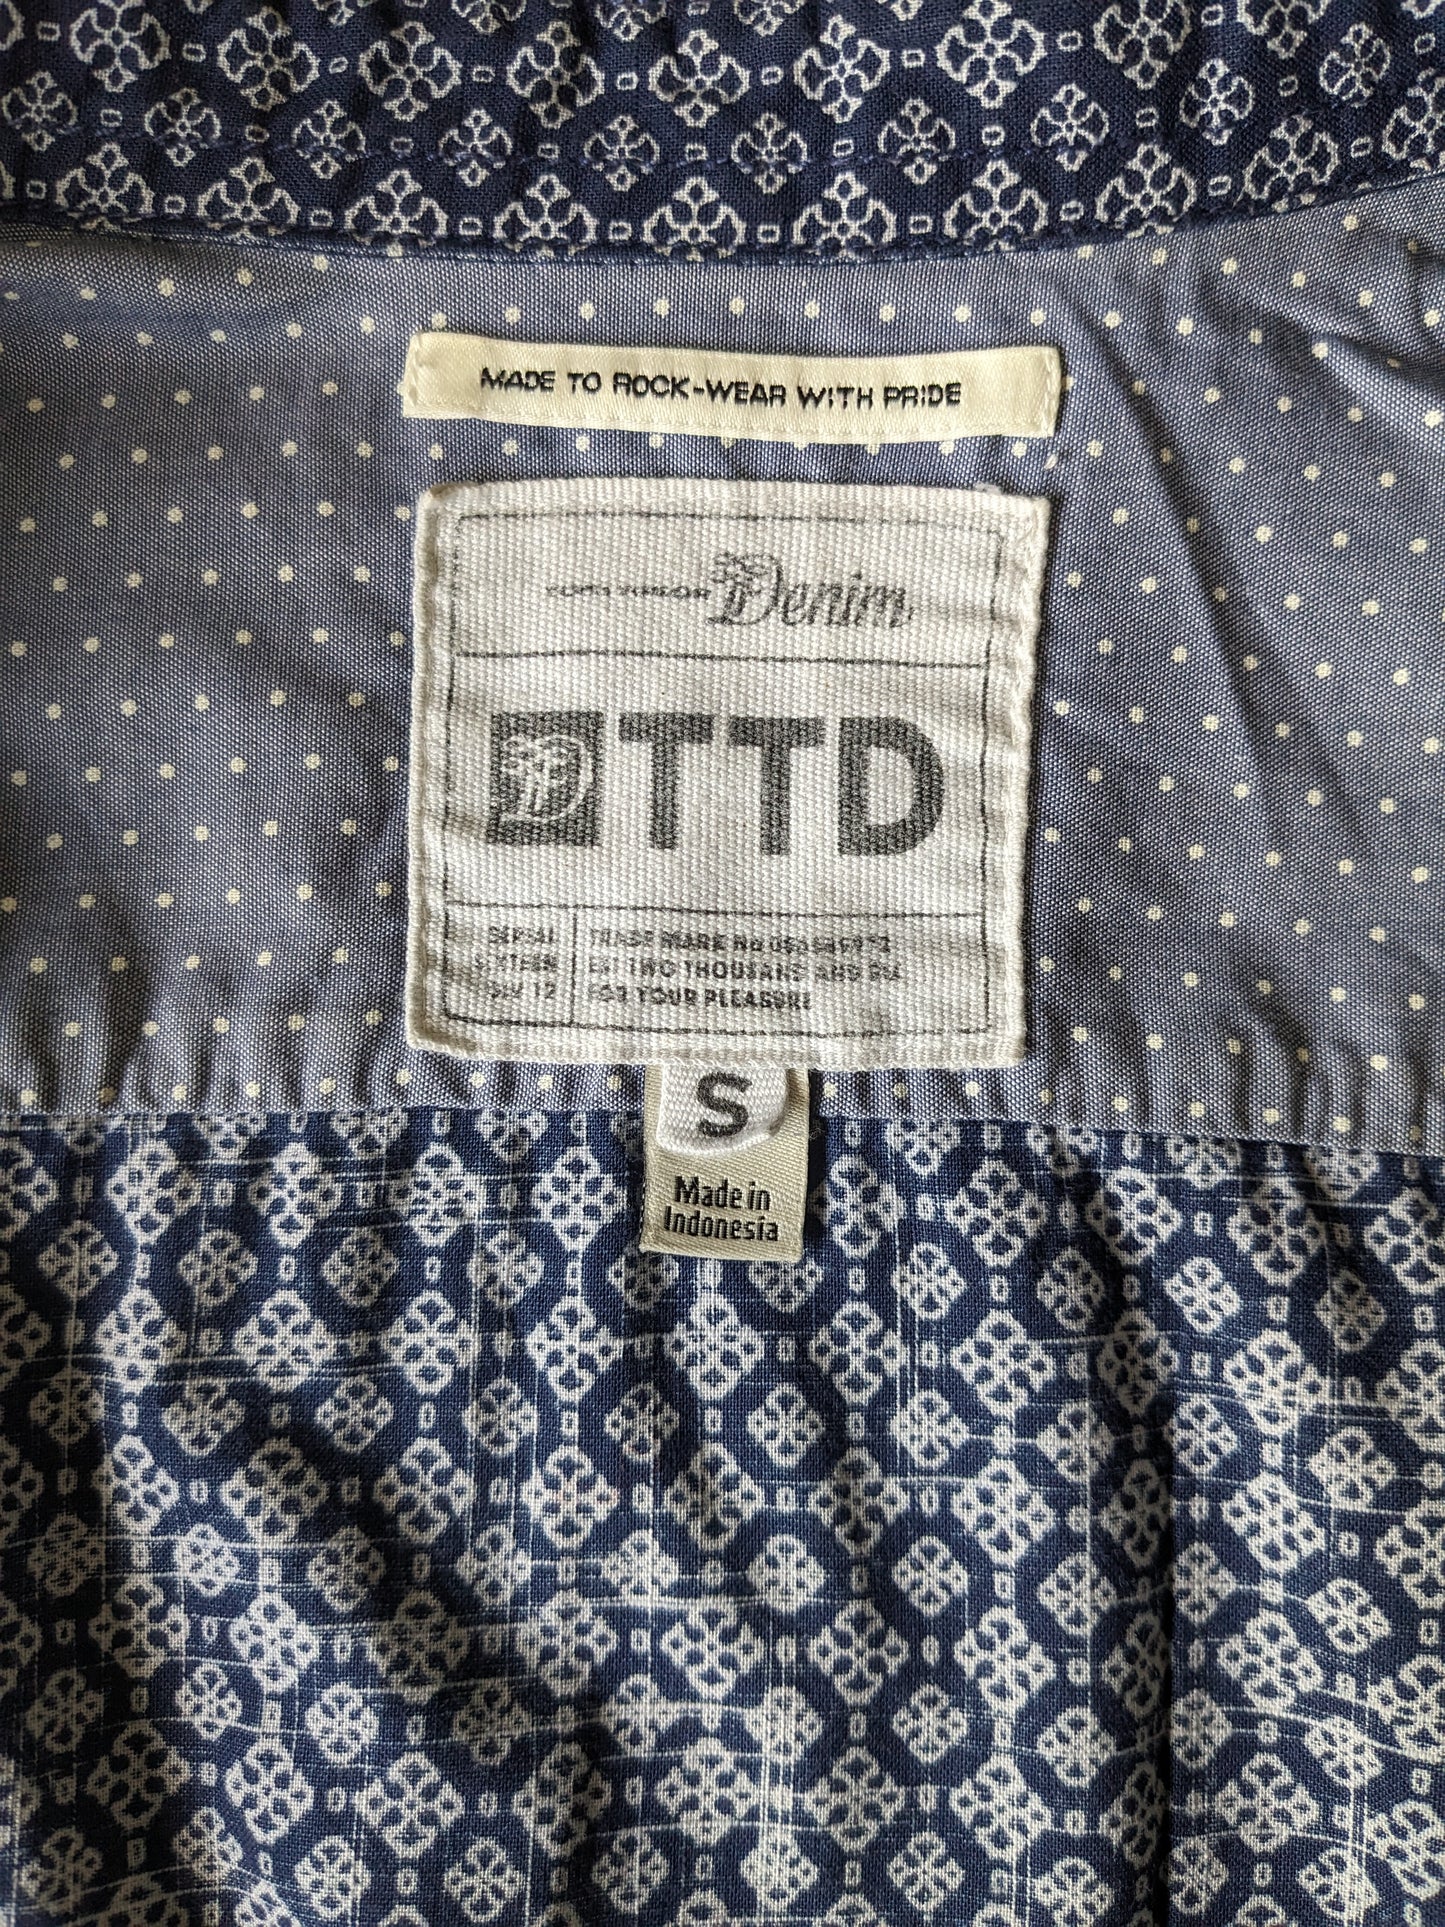 Tom Tailor Denim Shirt. Impression blanche bleue. Taille S.